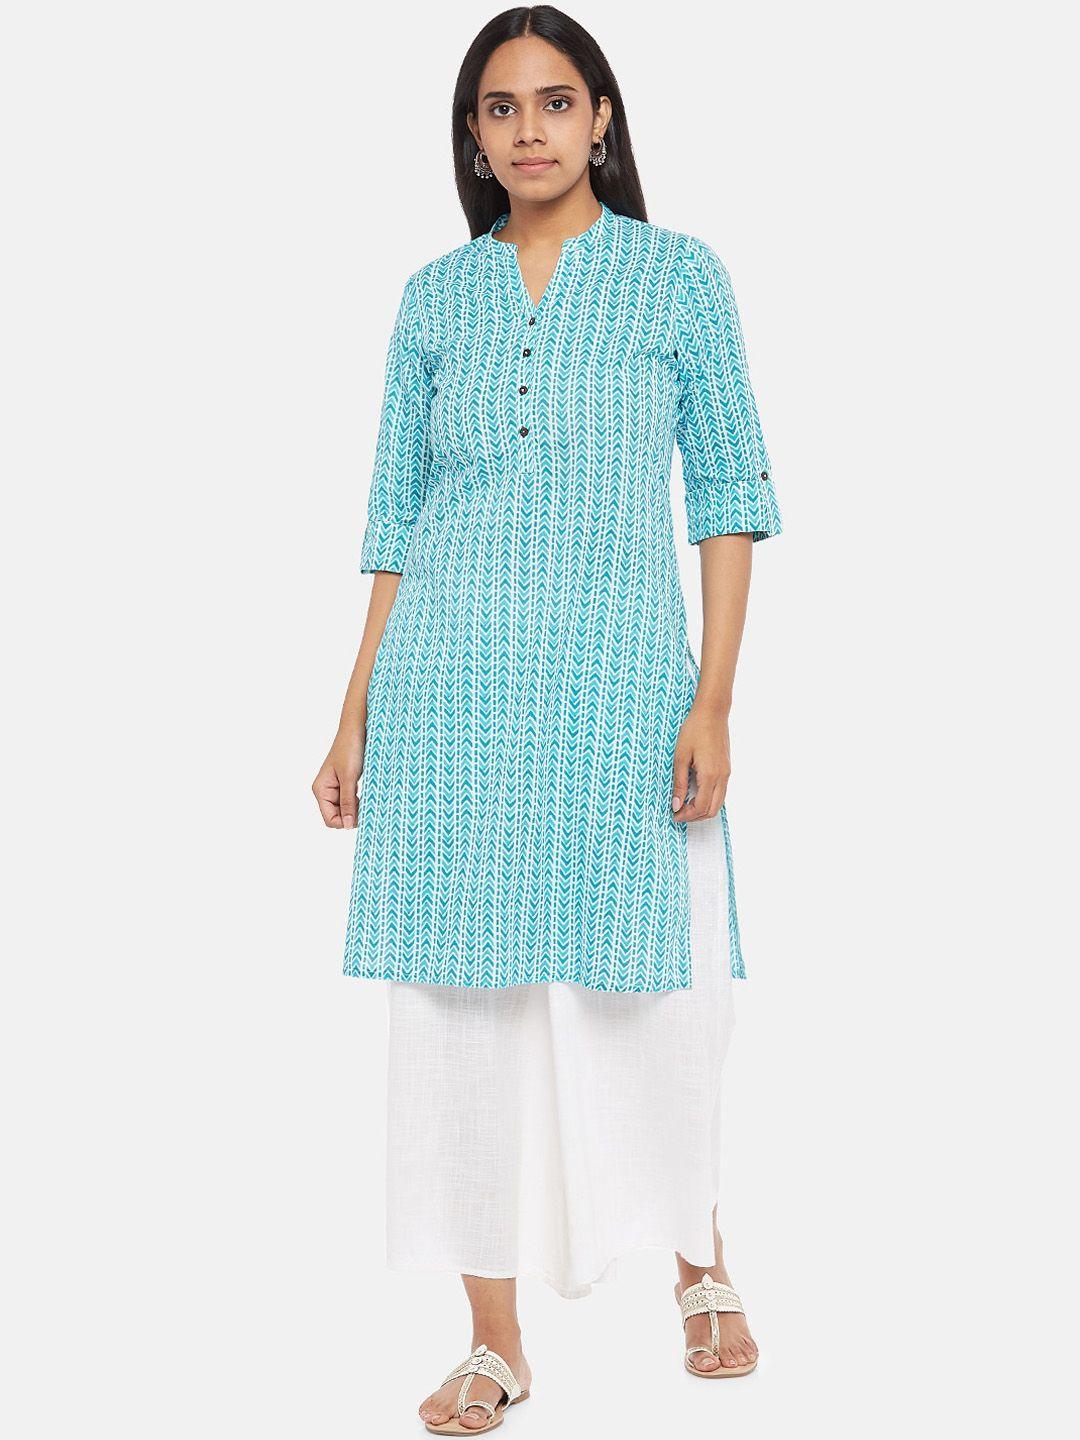 rangmanch-by-pantaloons-women-turquoise-blue-geometric-striped-thread-work-kurta